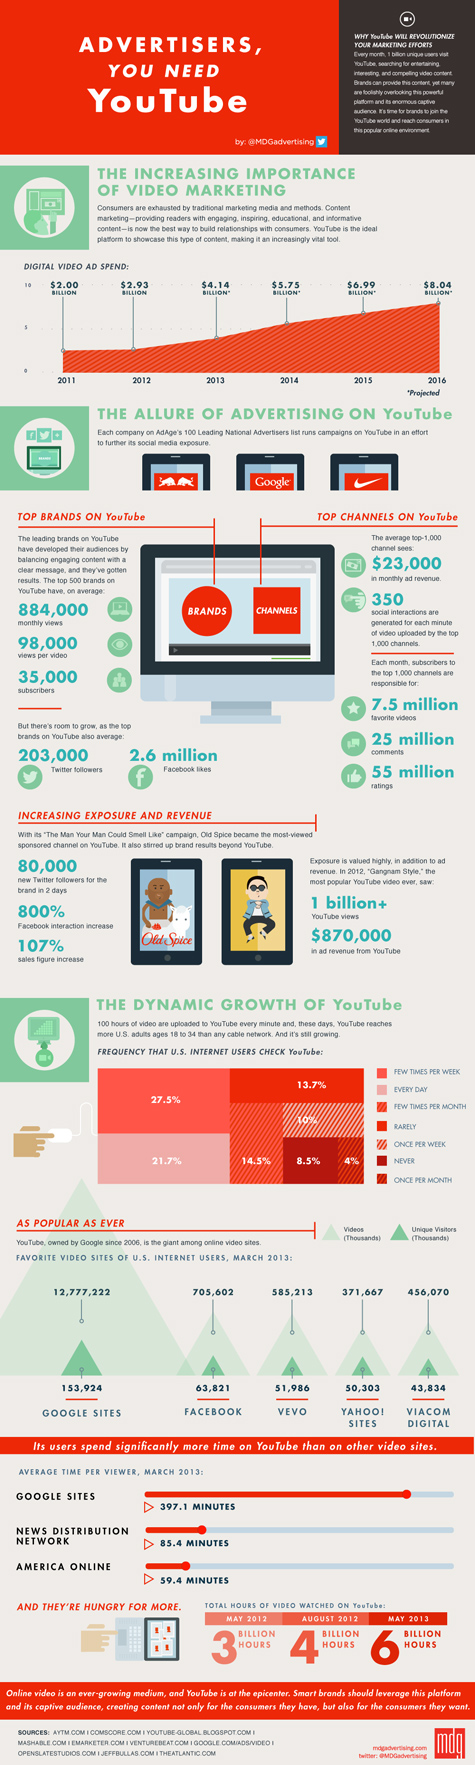 Advertisers, You Need YouTube [Infographic]